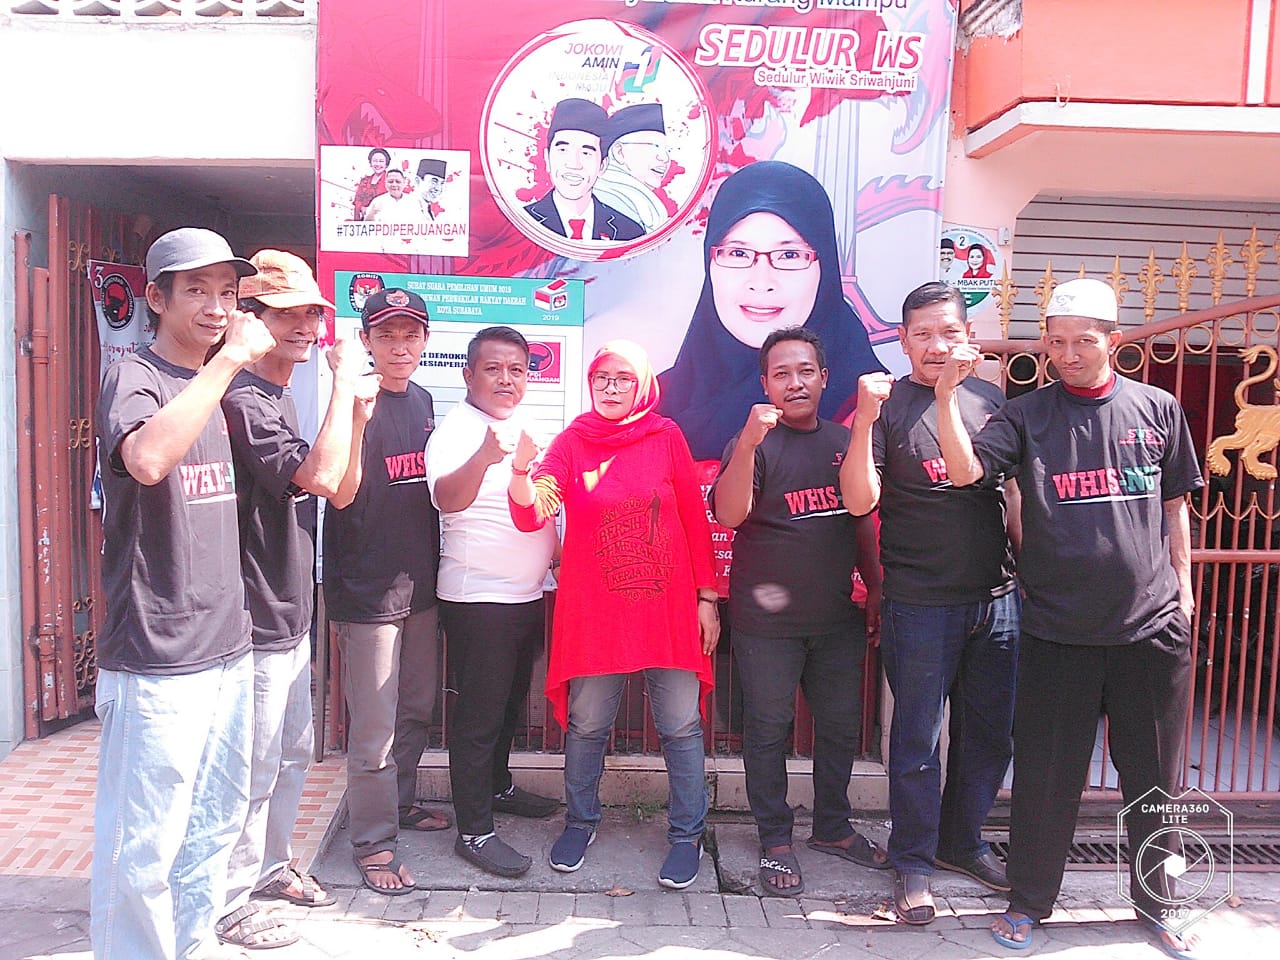 Relawan Jokowi Pertegas Pilihannya, ” Orang Baik Pilih Orang Baik “